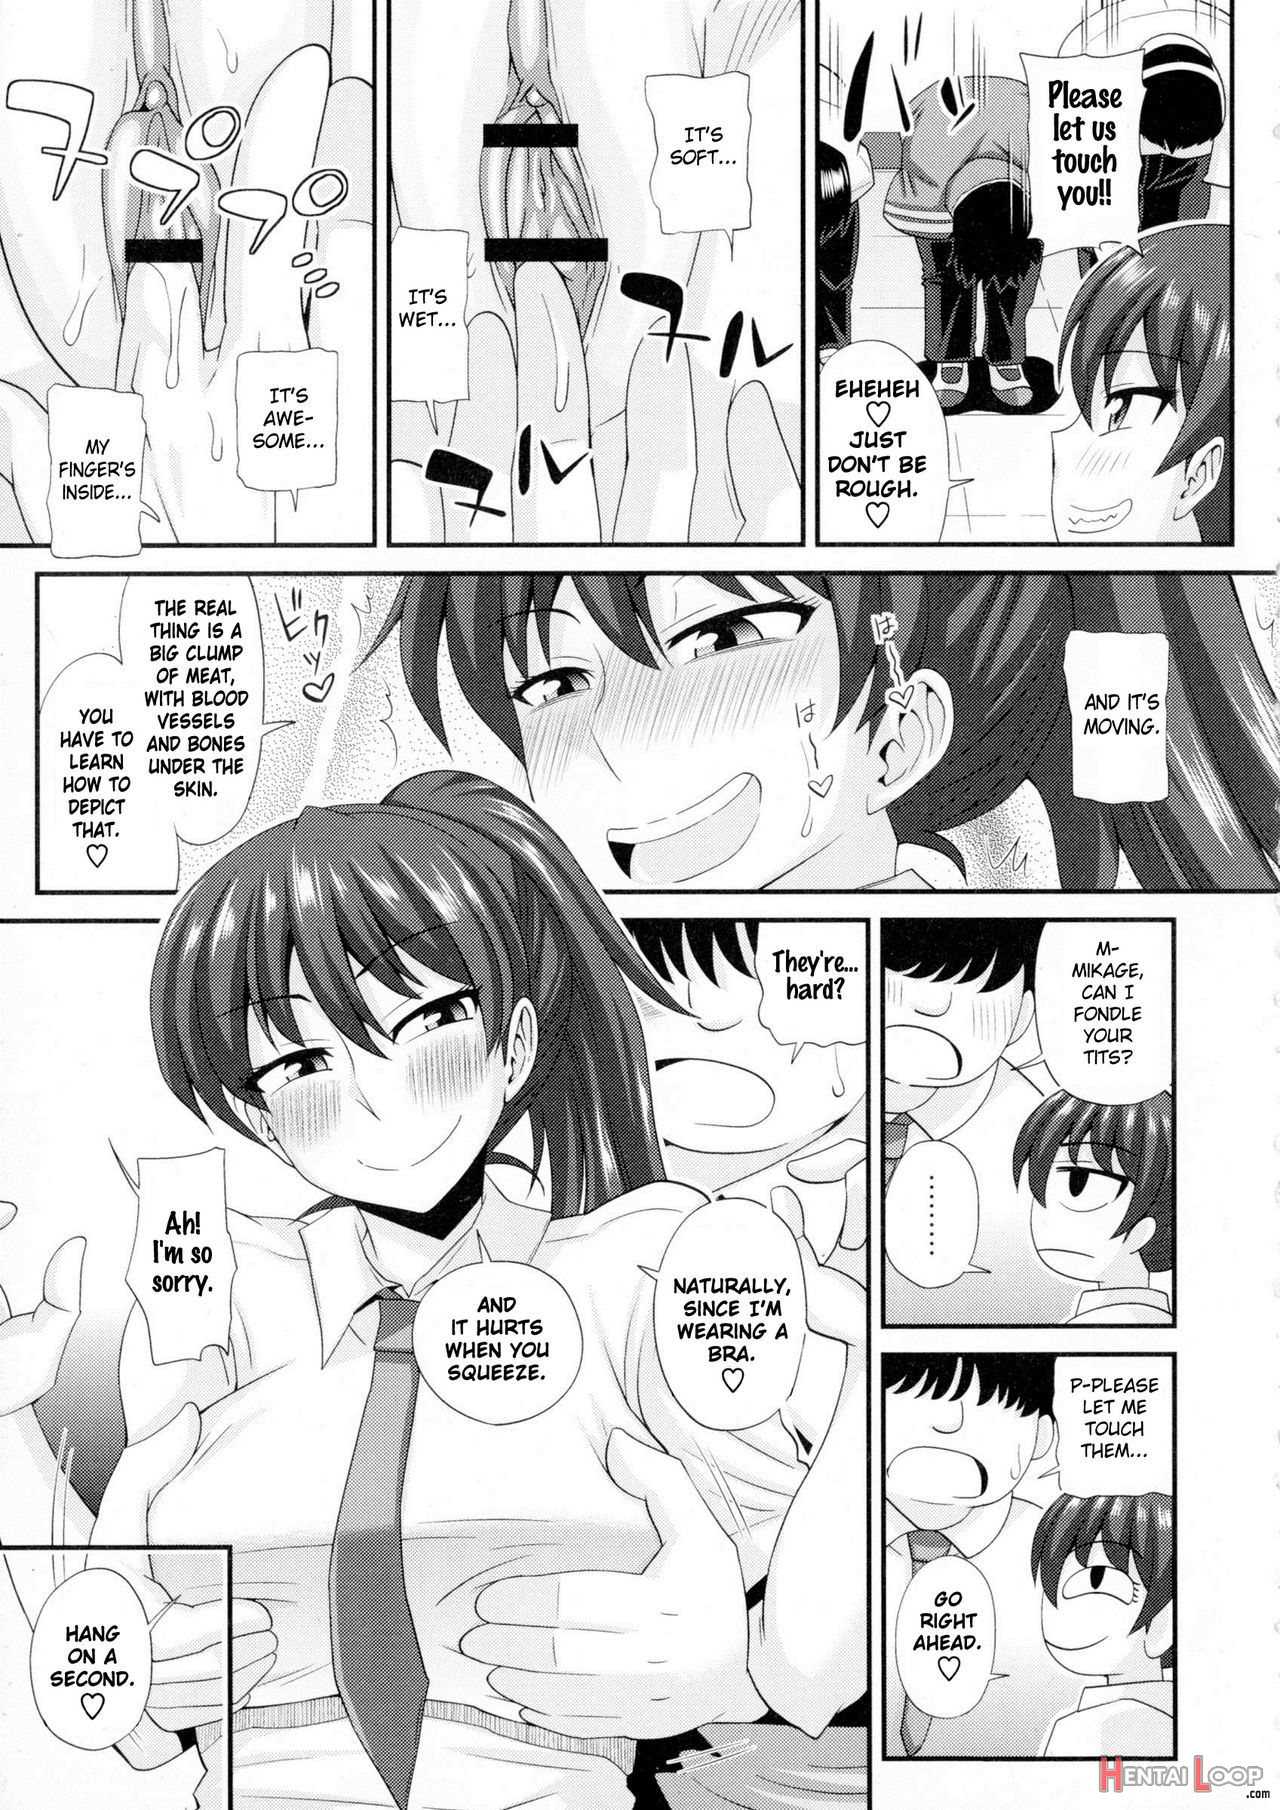 Futakyo! page 11